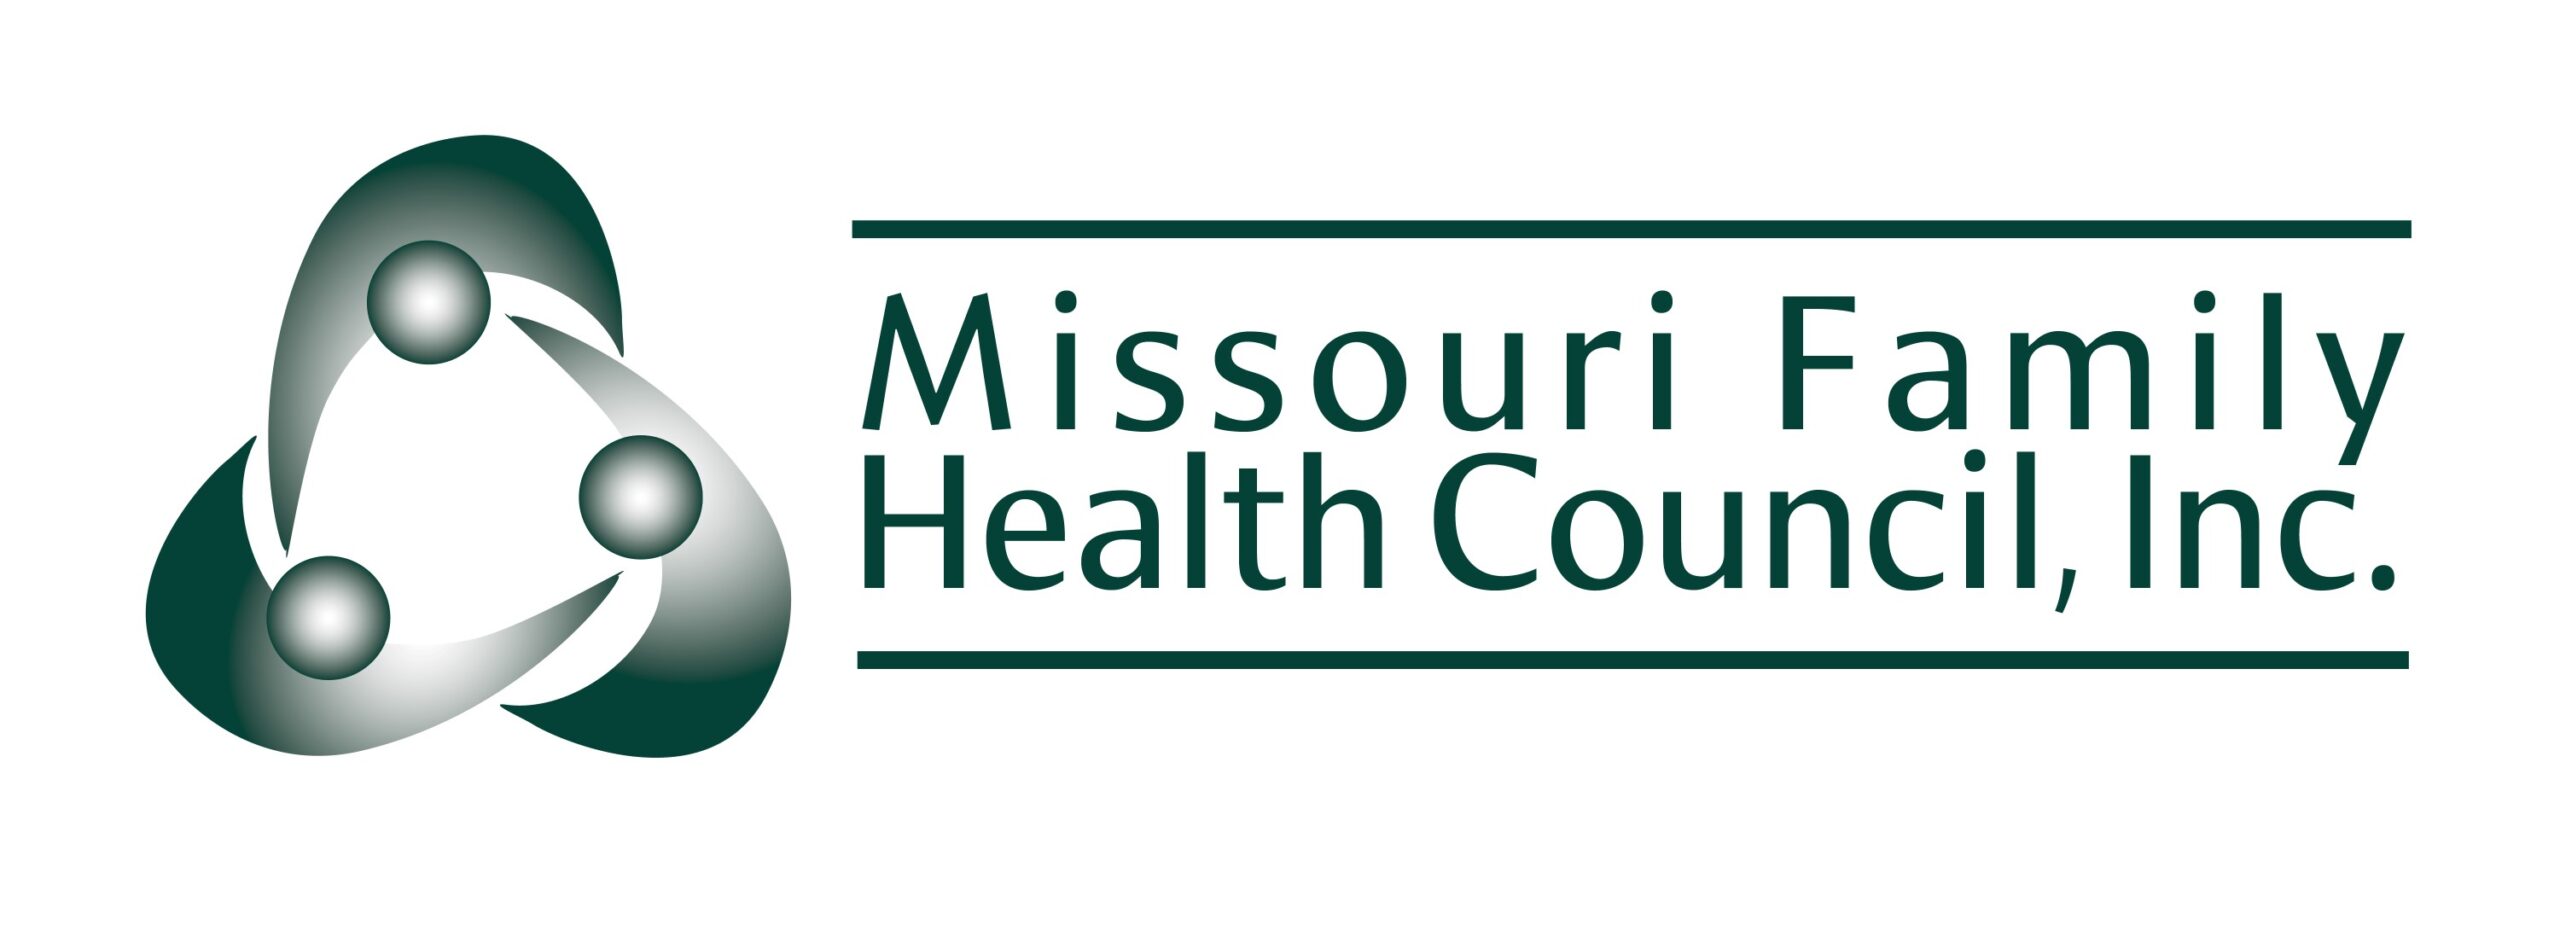 Missouri Family Health Council, Inc.